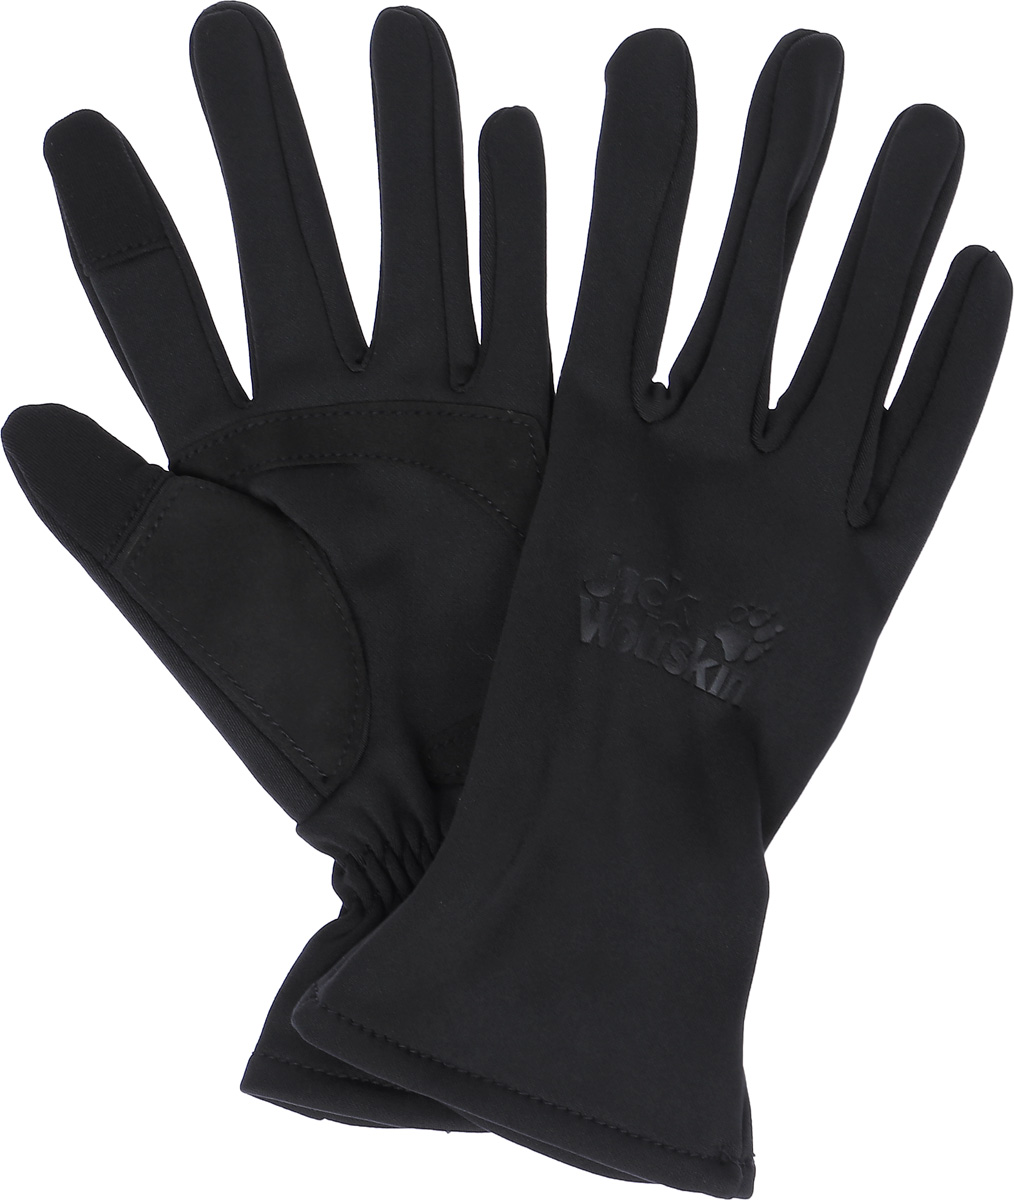 Перчатки Jack Wolfskin Dynamic Touch Glove, цвет: черный. 1903152-6000. Размер S (7,5)